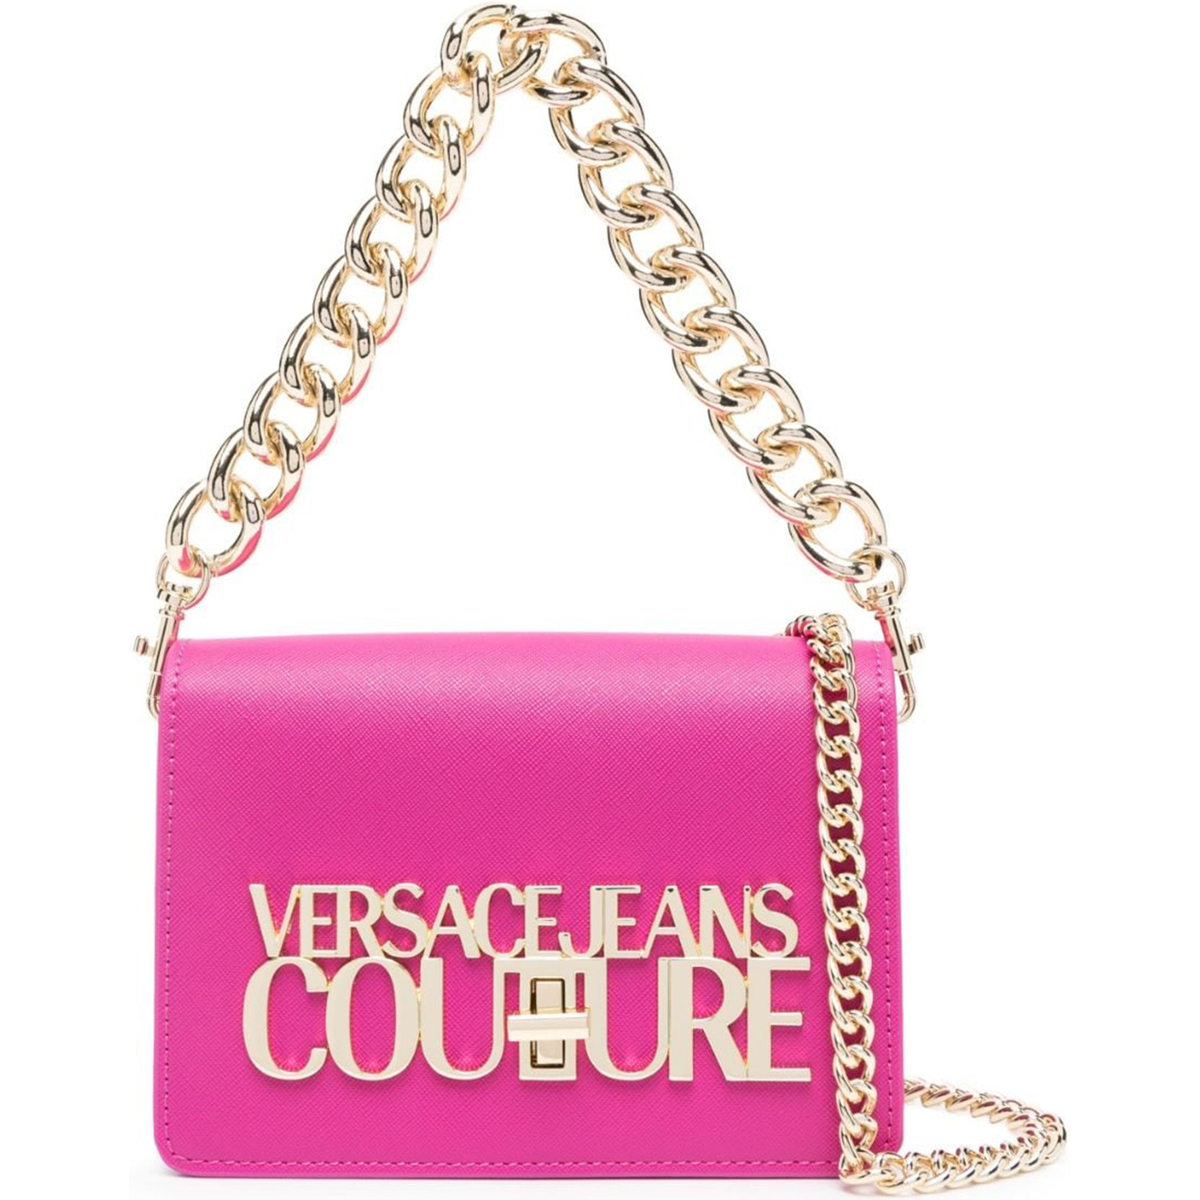 Versace Jeans Couture Rose 75va4bl3zs467-312 oBHGaq6e